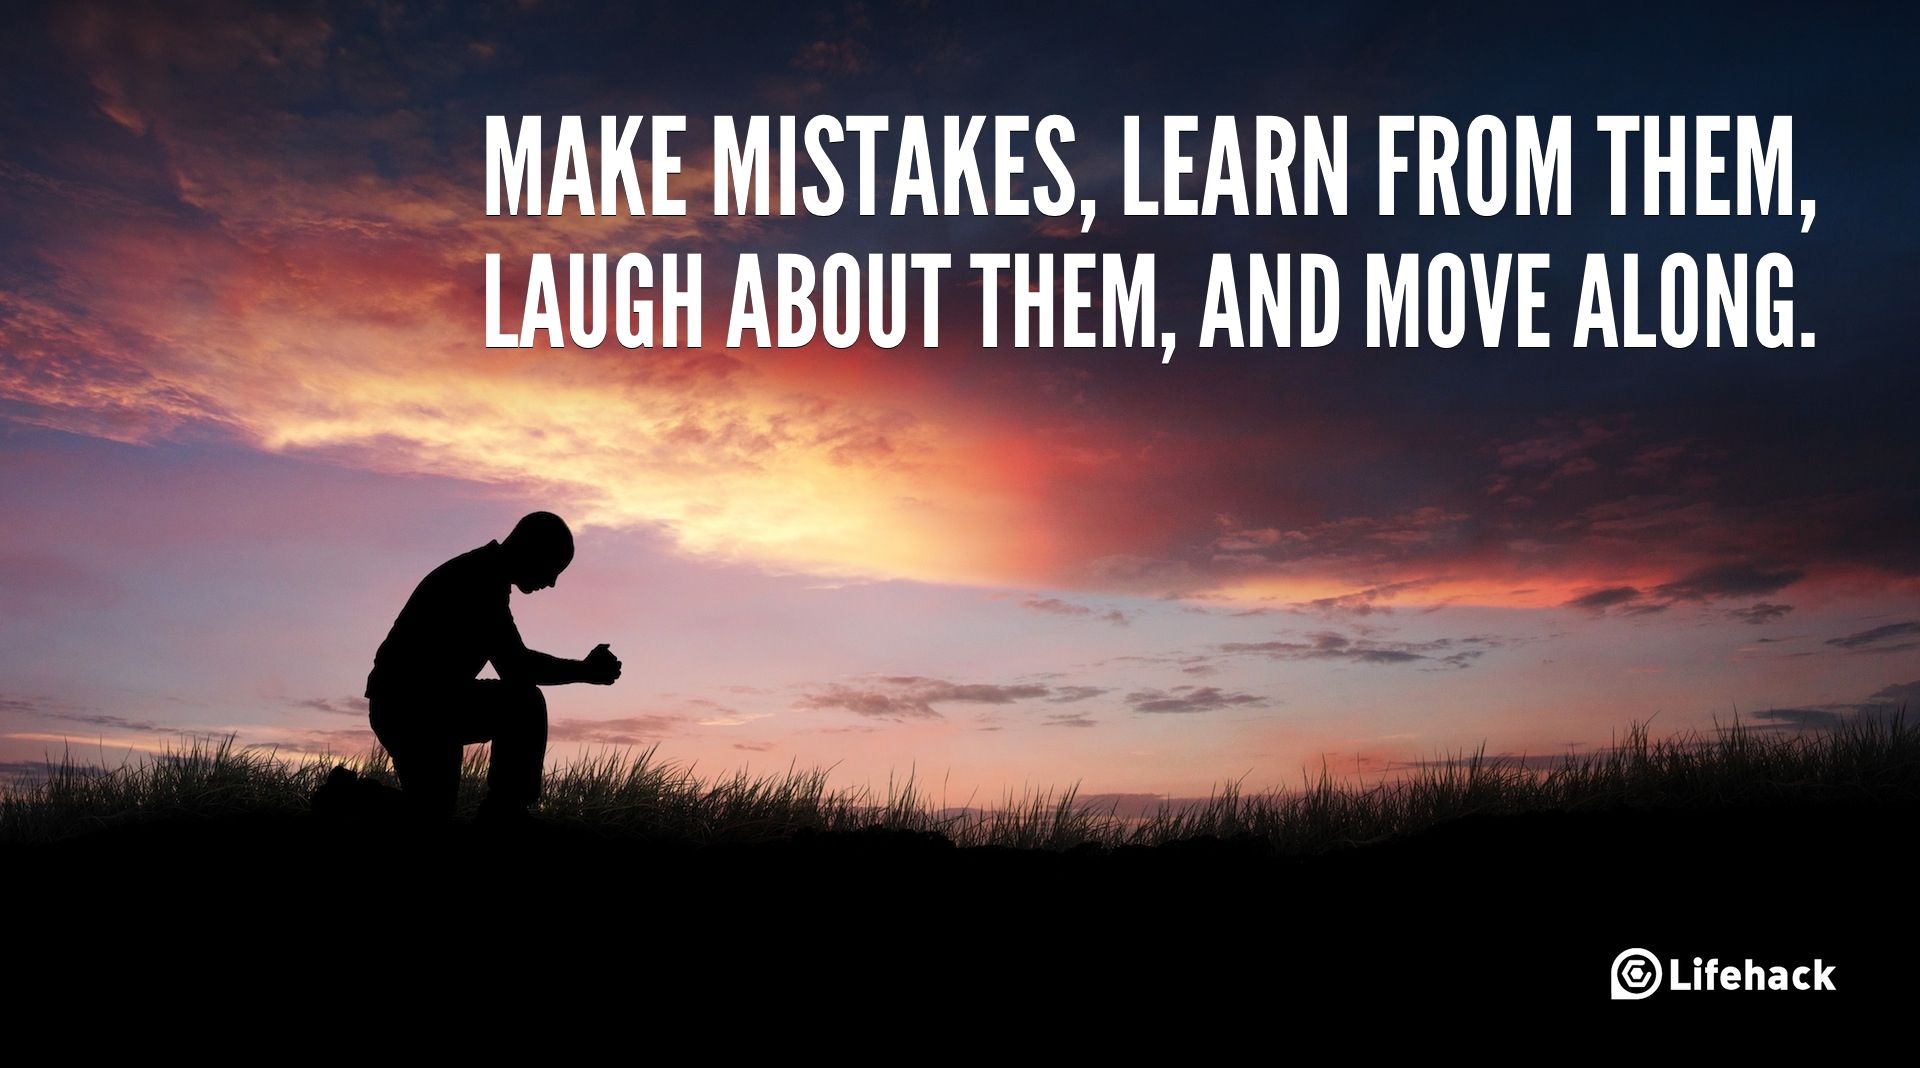 30sec Tip: Make Mistakes